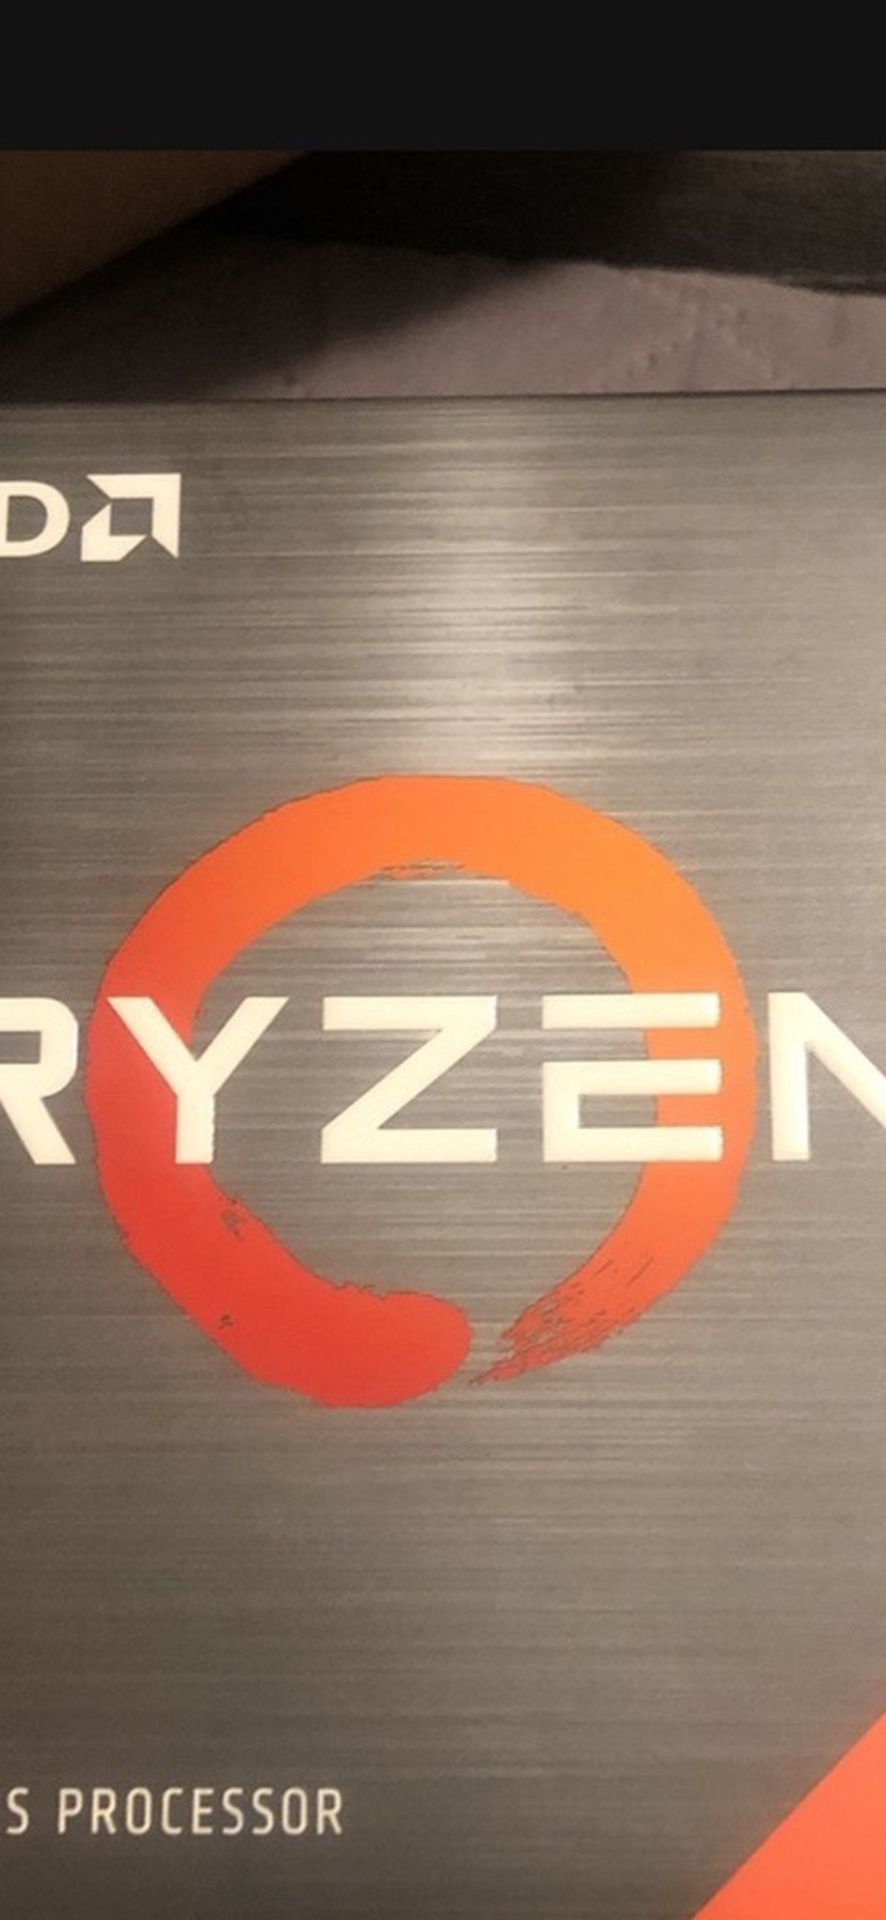 AMD Ryzen™ 5 5600X 6-core/12-thread Desktop Processor